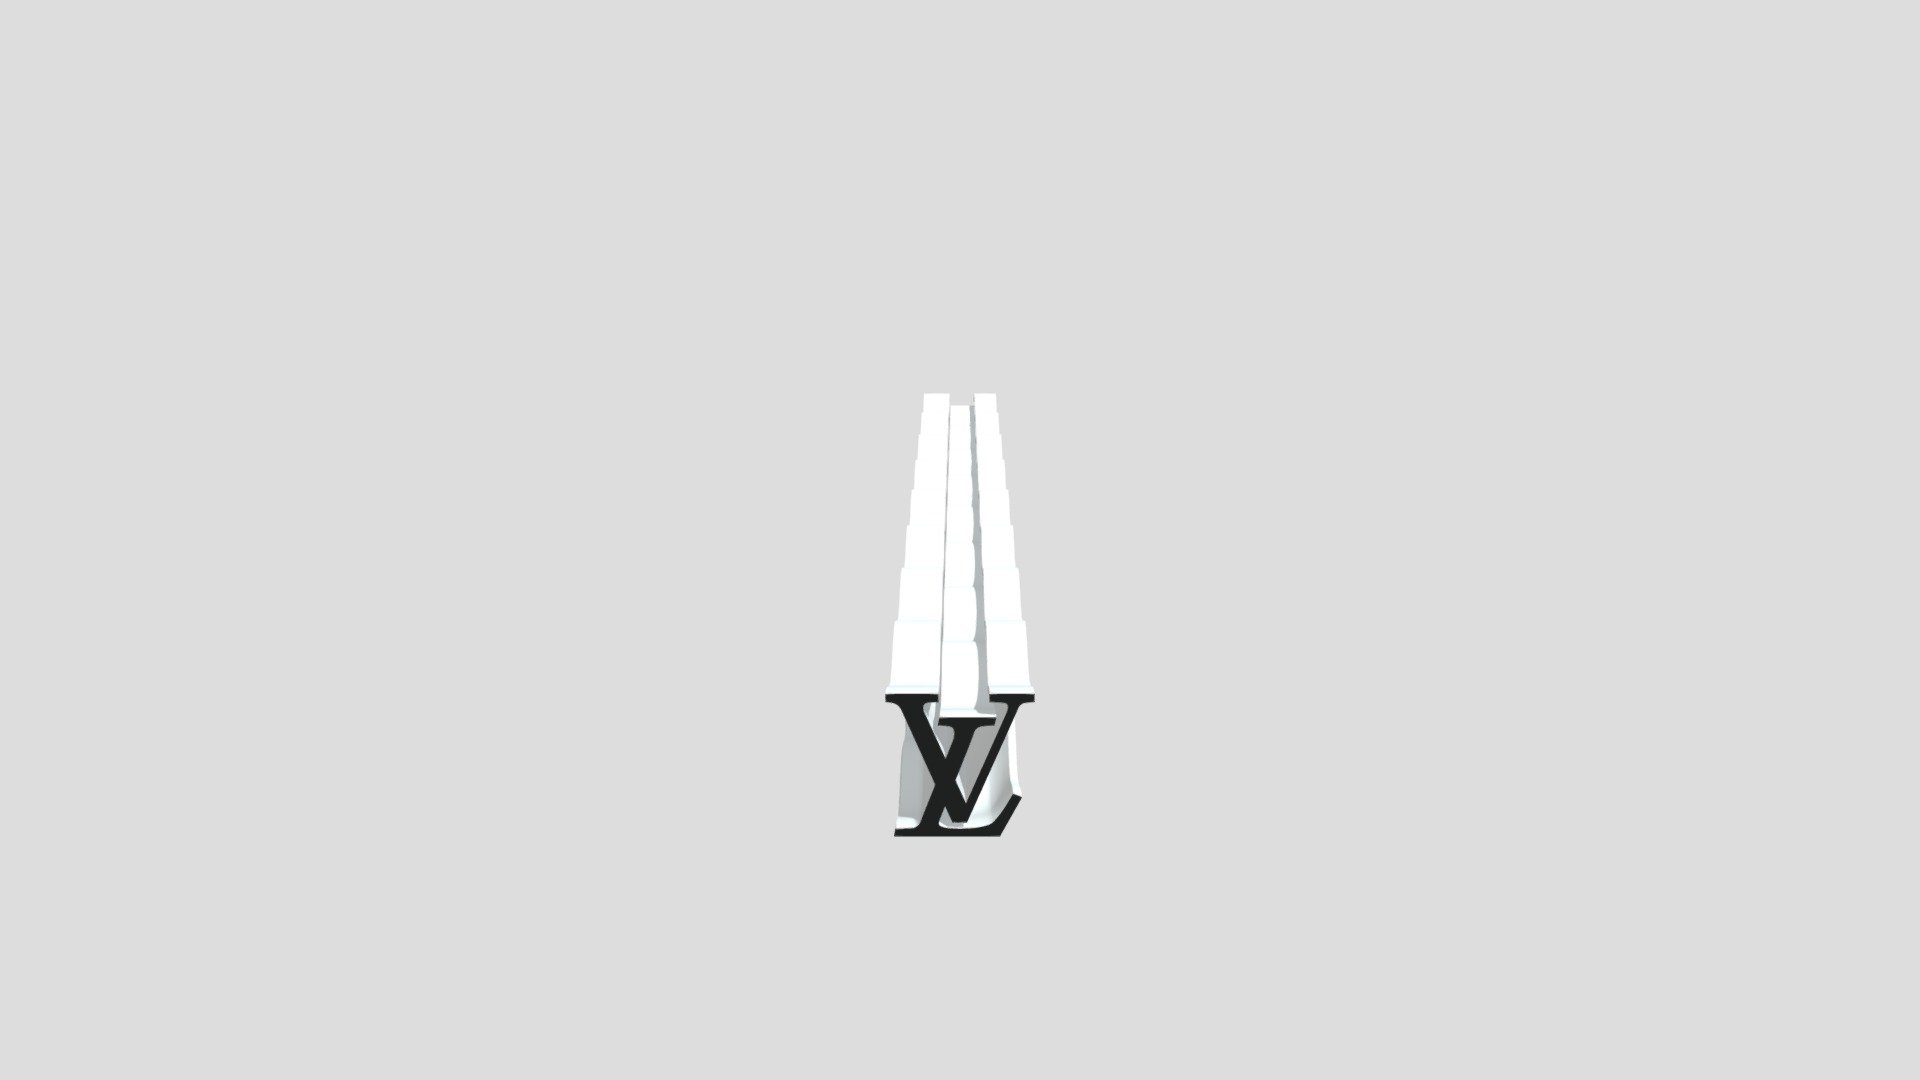 Louis Vuitton logo 3D model